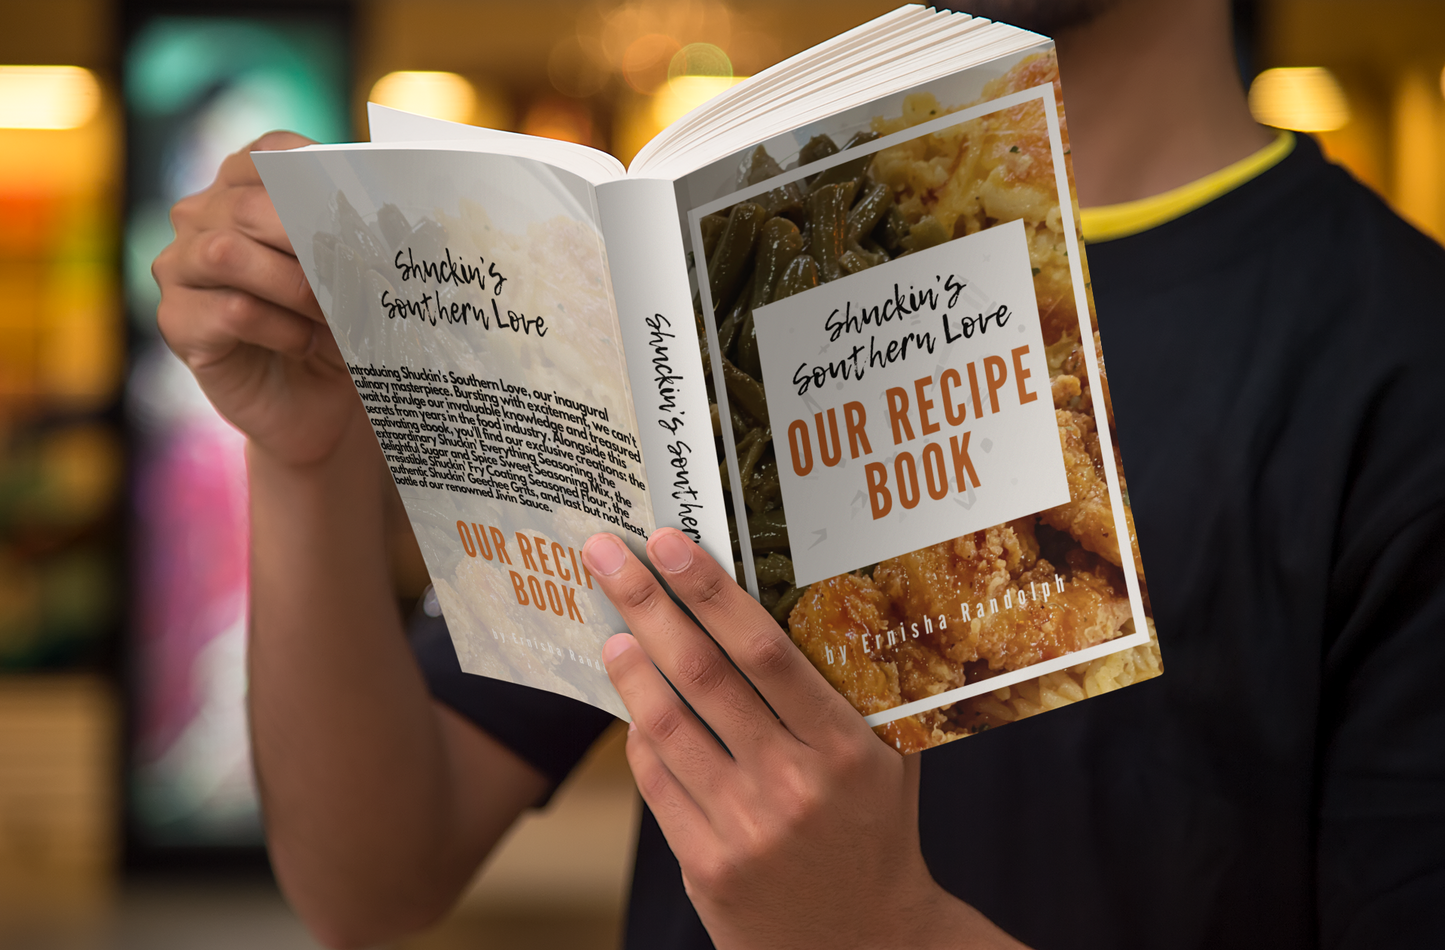 BUNDLE of Shuckin's Southern Love (Our Recipe Book) E-BOOK PRE-ORDER